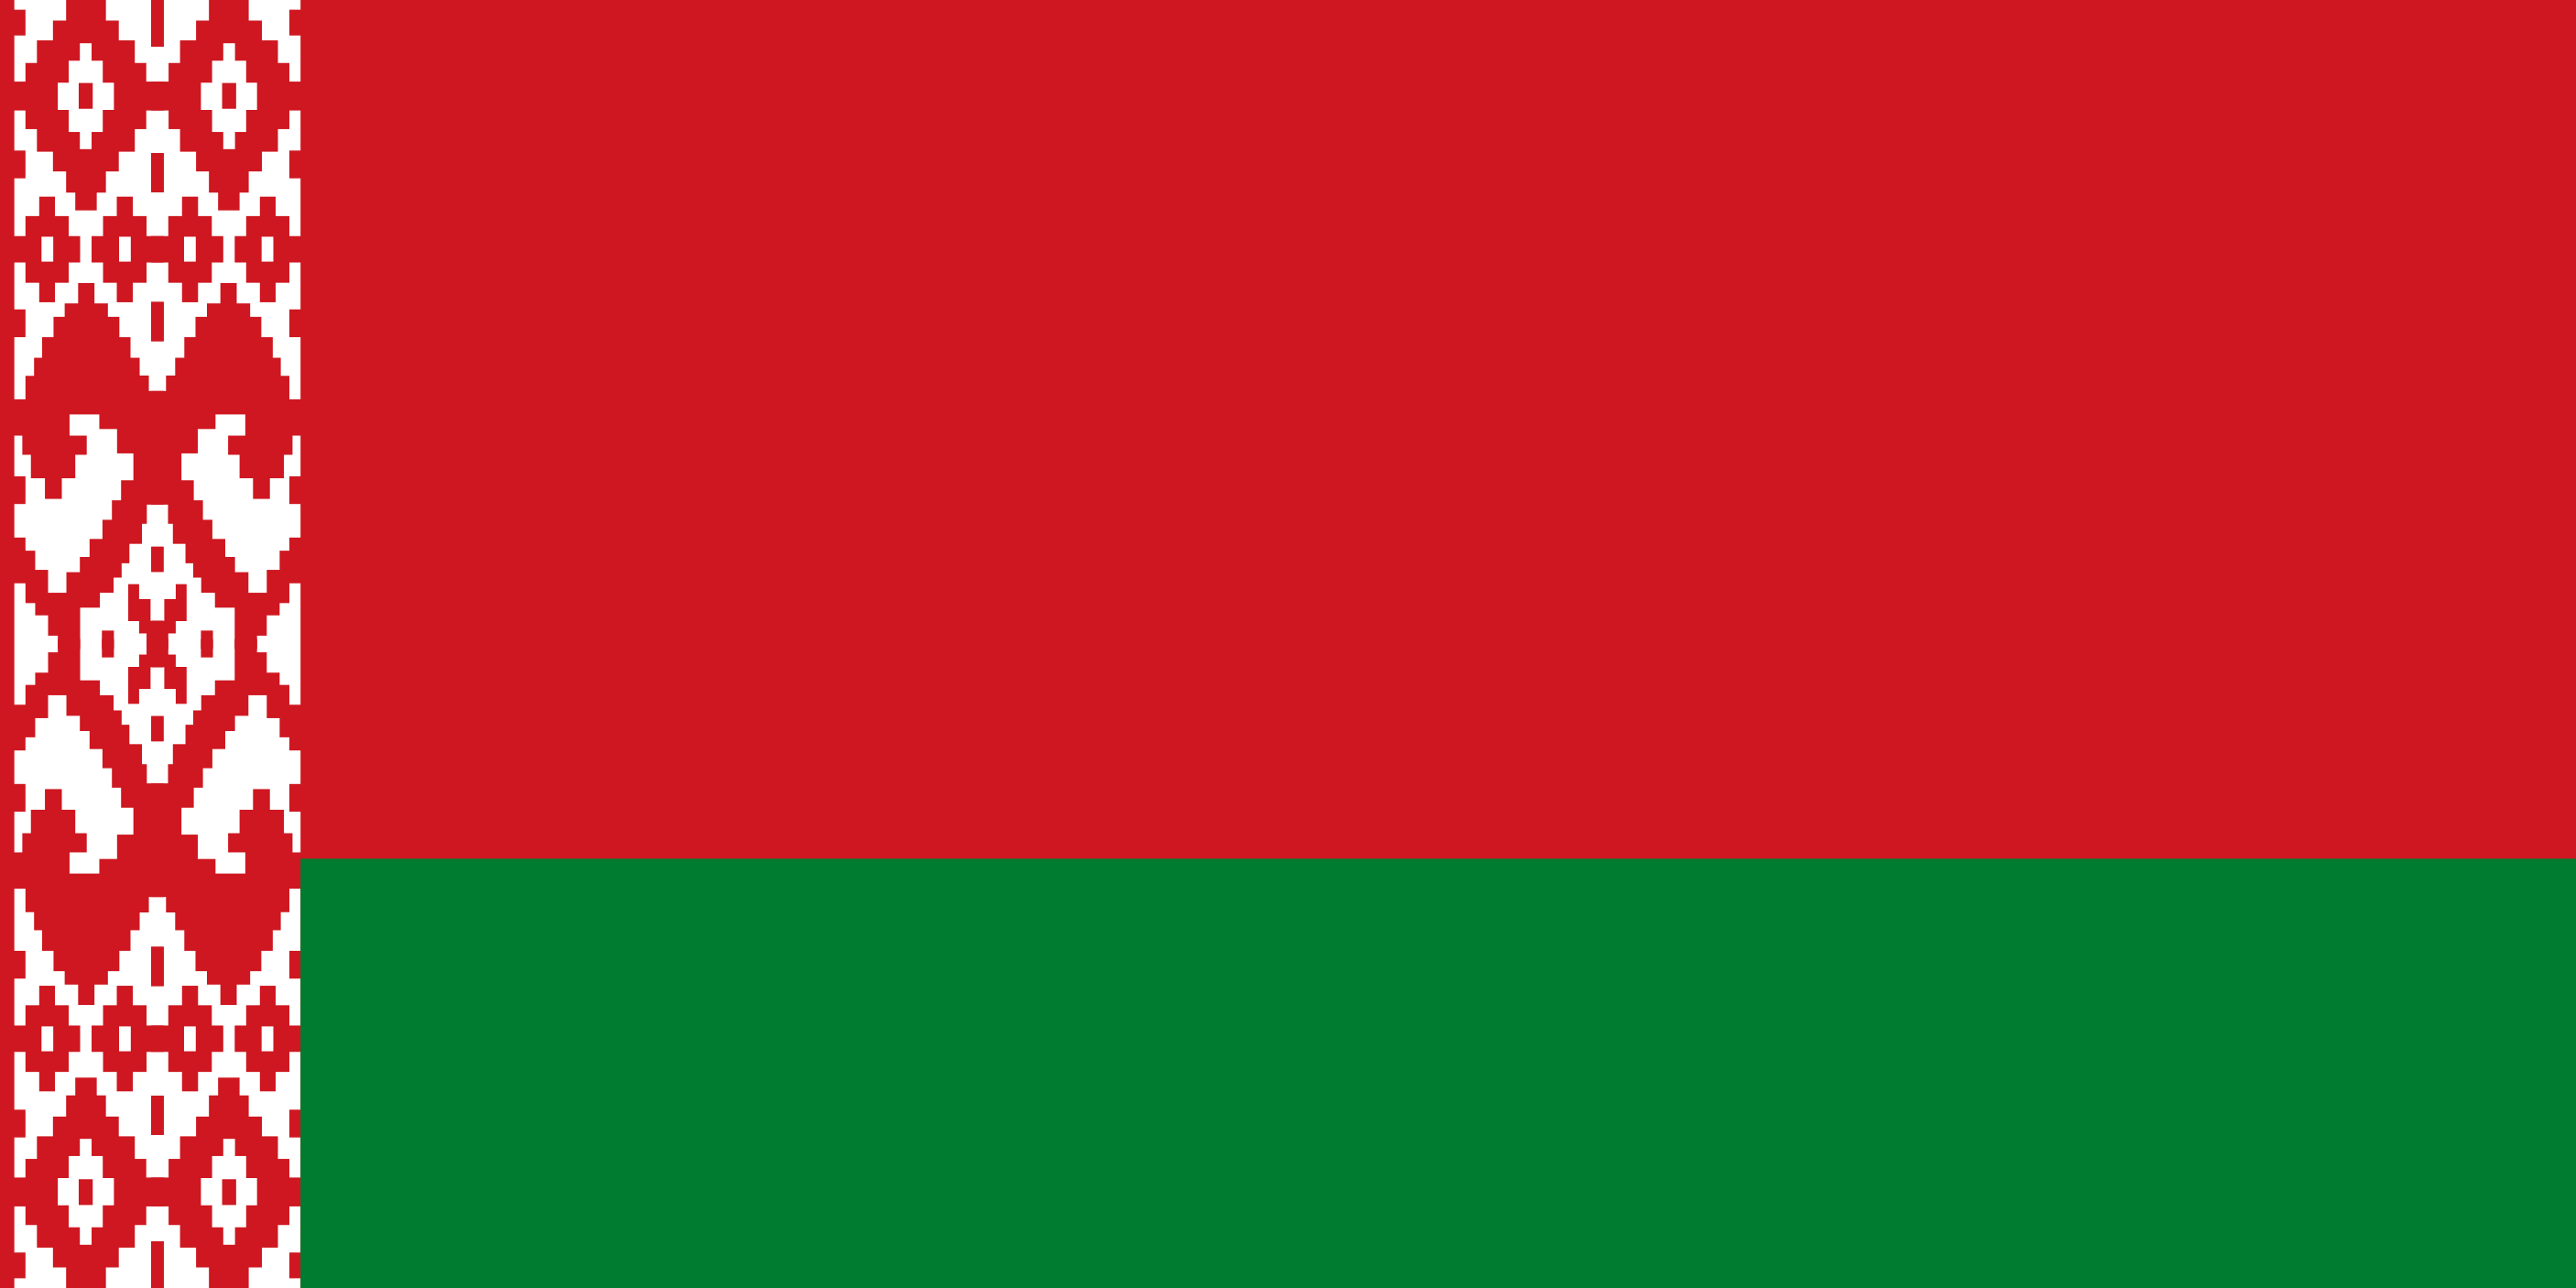 Free Belarus Flag Documents: PDF, DOC, DOCX, HTML & More!